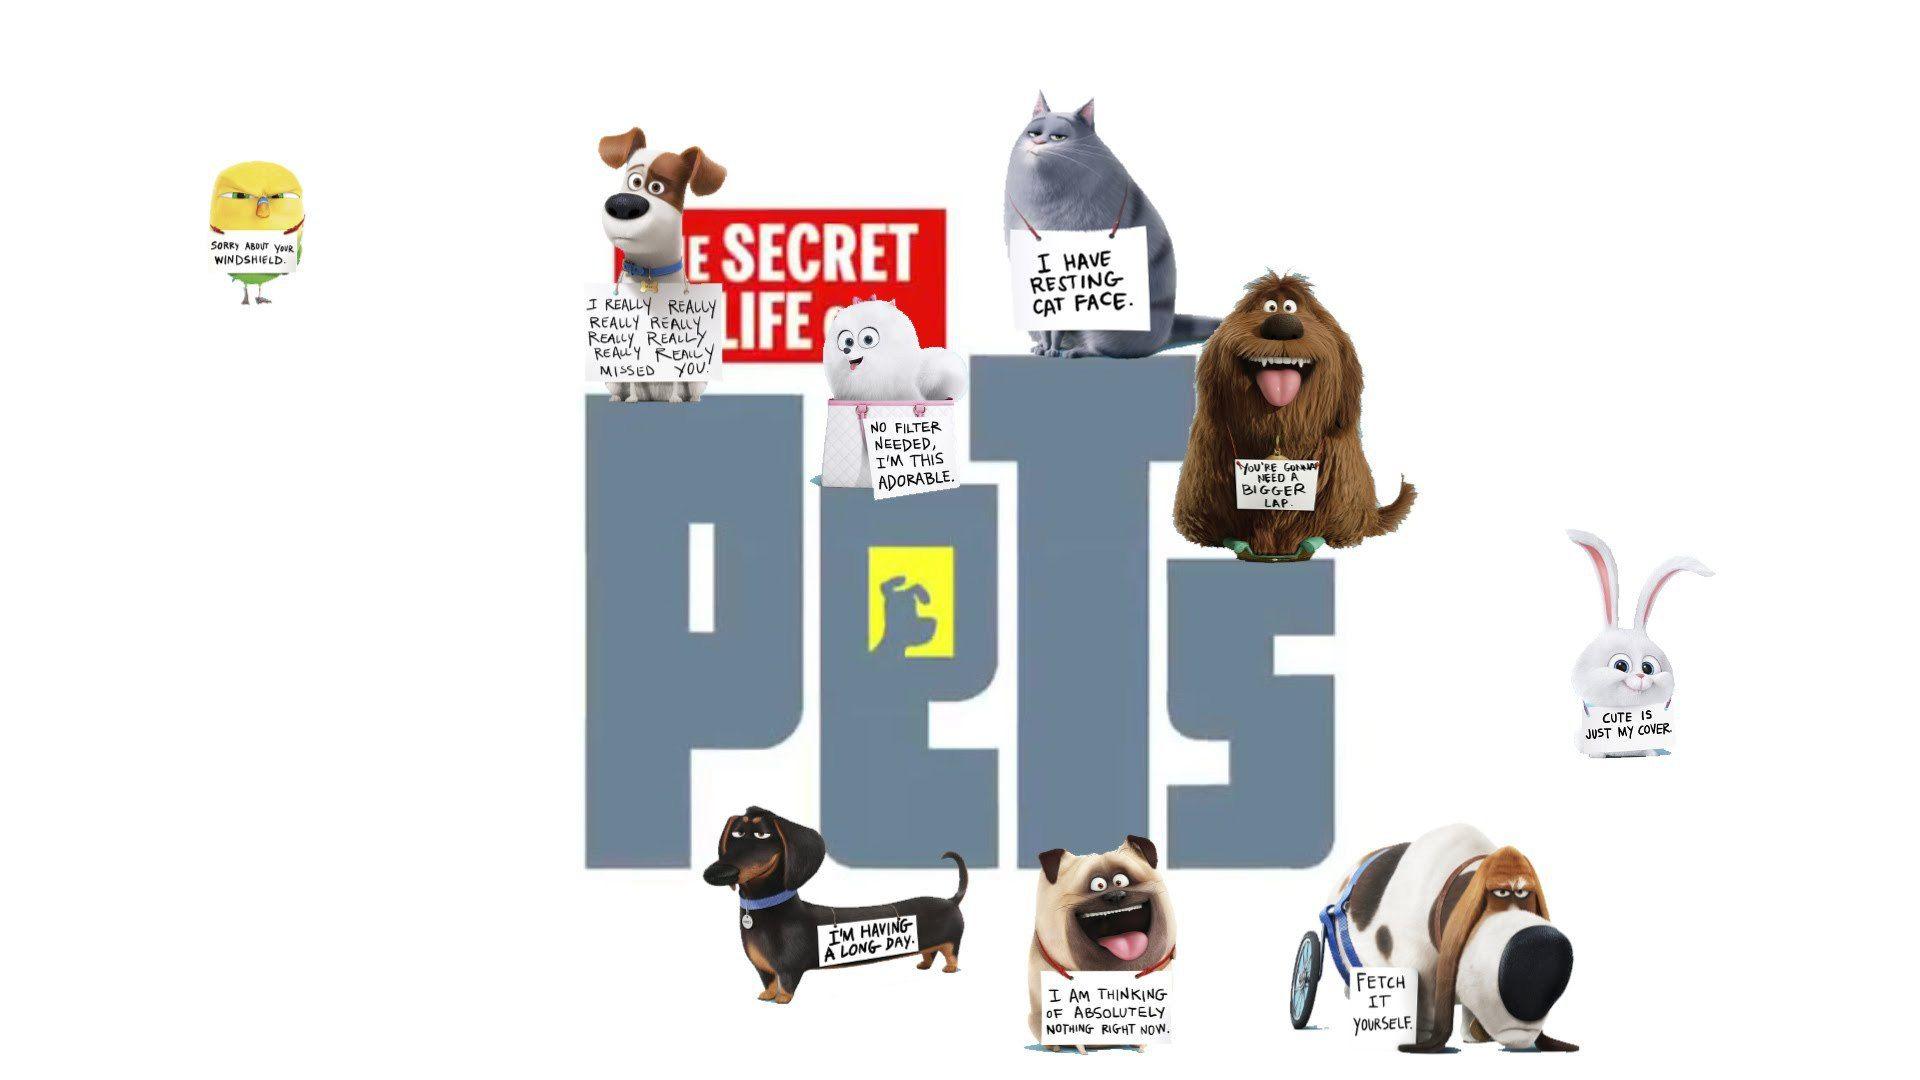 The Secret Life of Pets Wallpaper Image Photo Picture